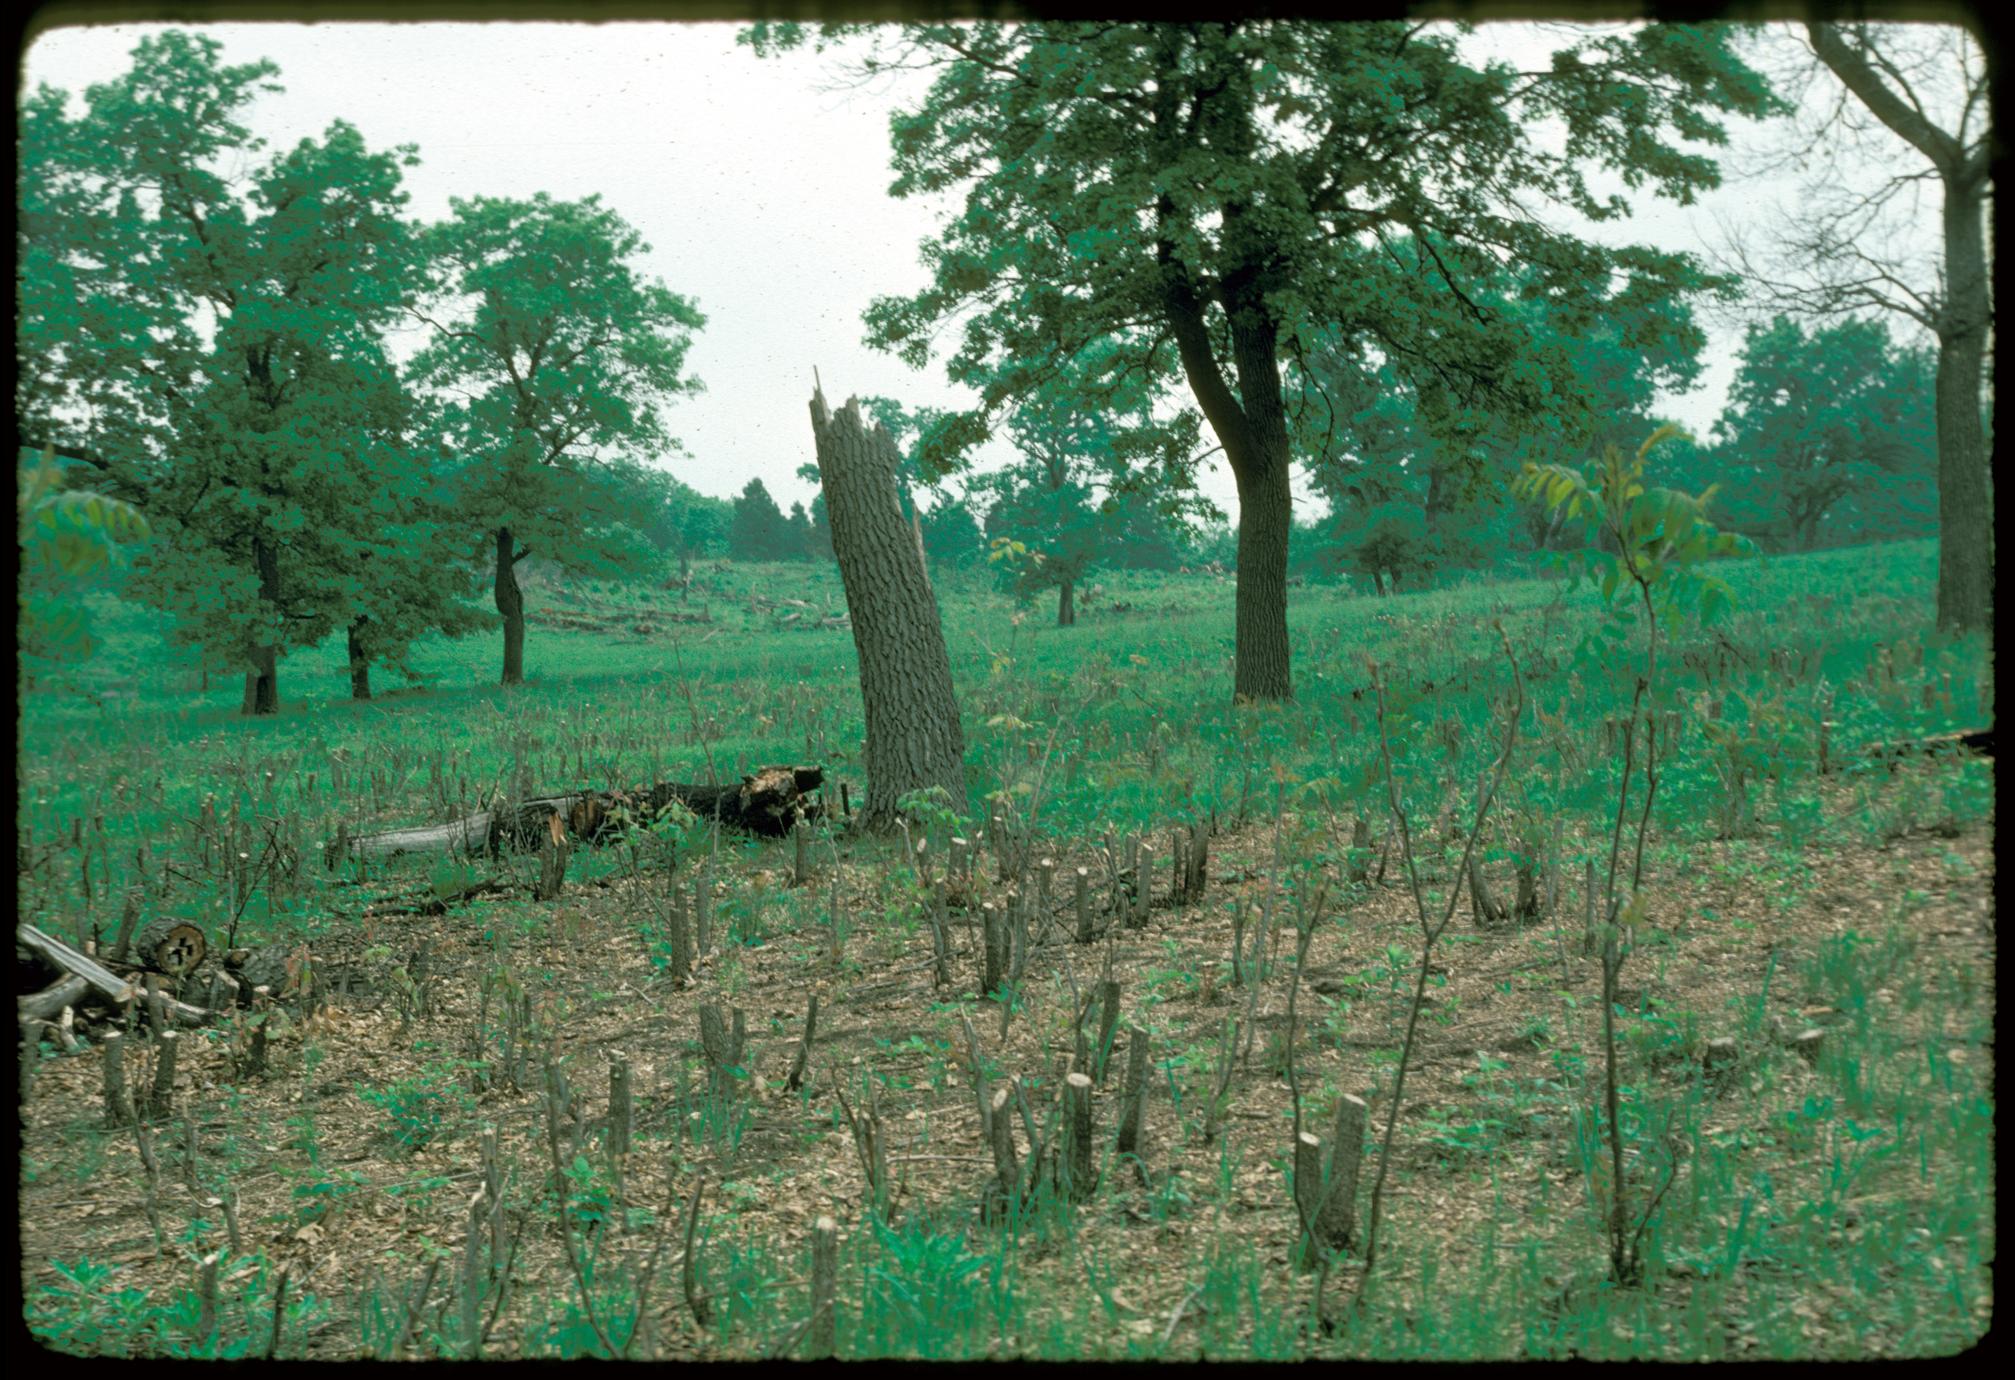 Oak wilt treated area greening in spring after burn, Grady Knoll, University of Wisconsin Arboretum